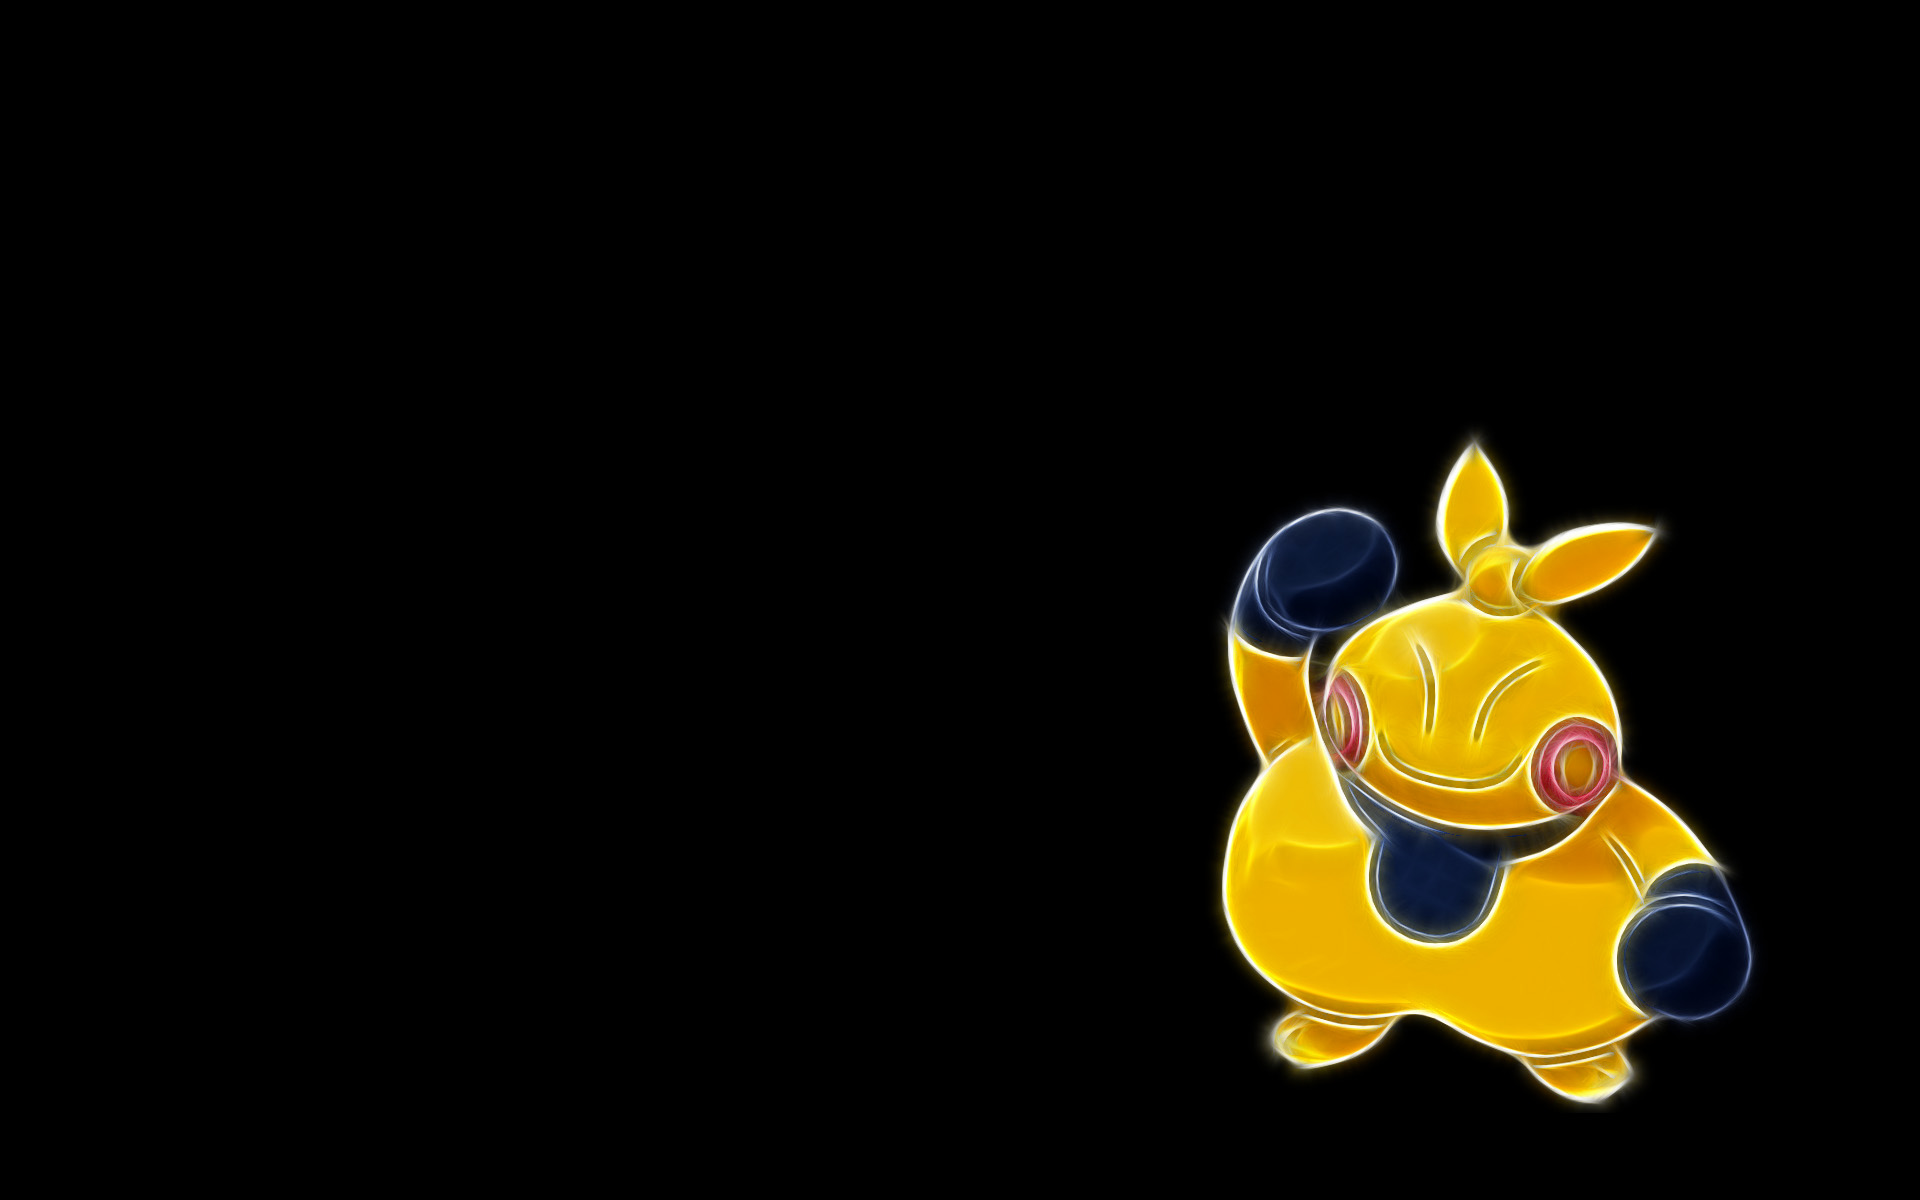 Download The Agile Fighting Pokemon Hitmonlee Flexing Its Coiled Leg  Wallpaper